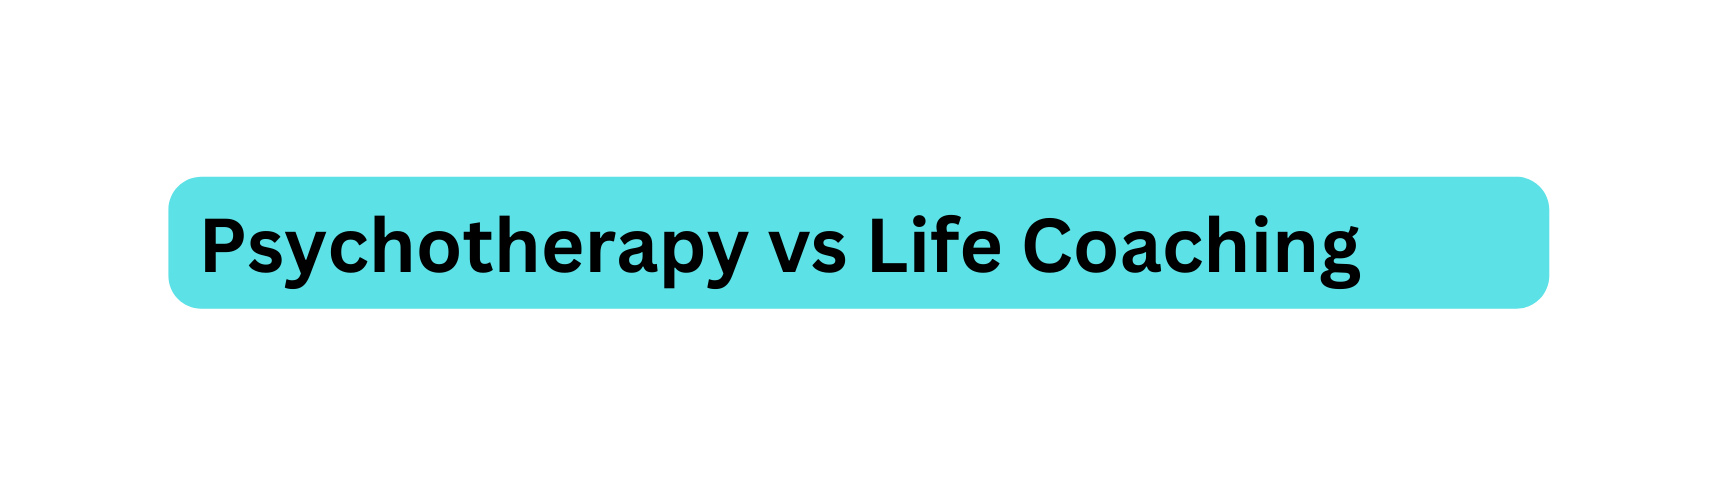 Psychotherapy vs Life Coaching